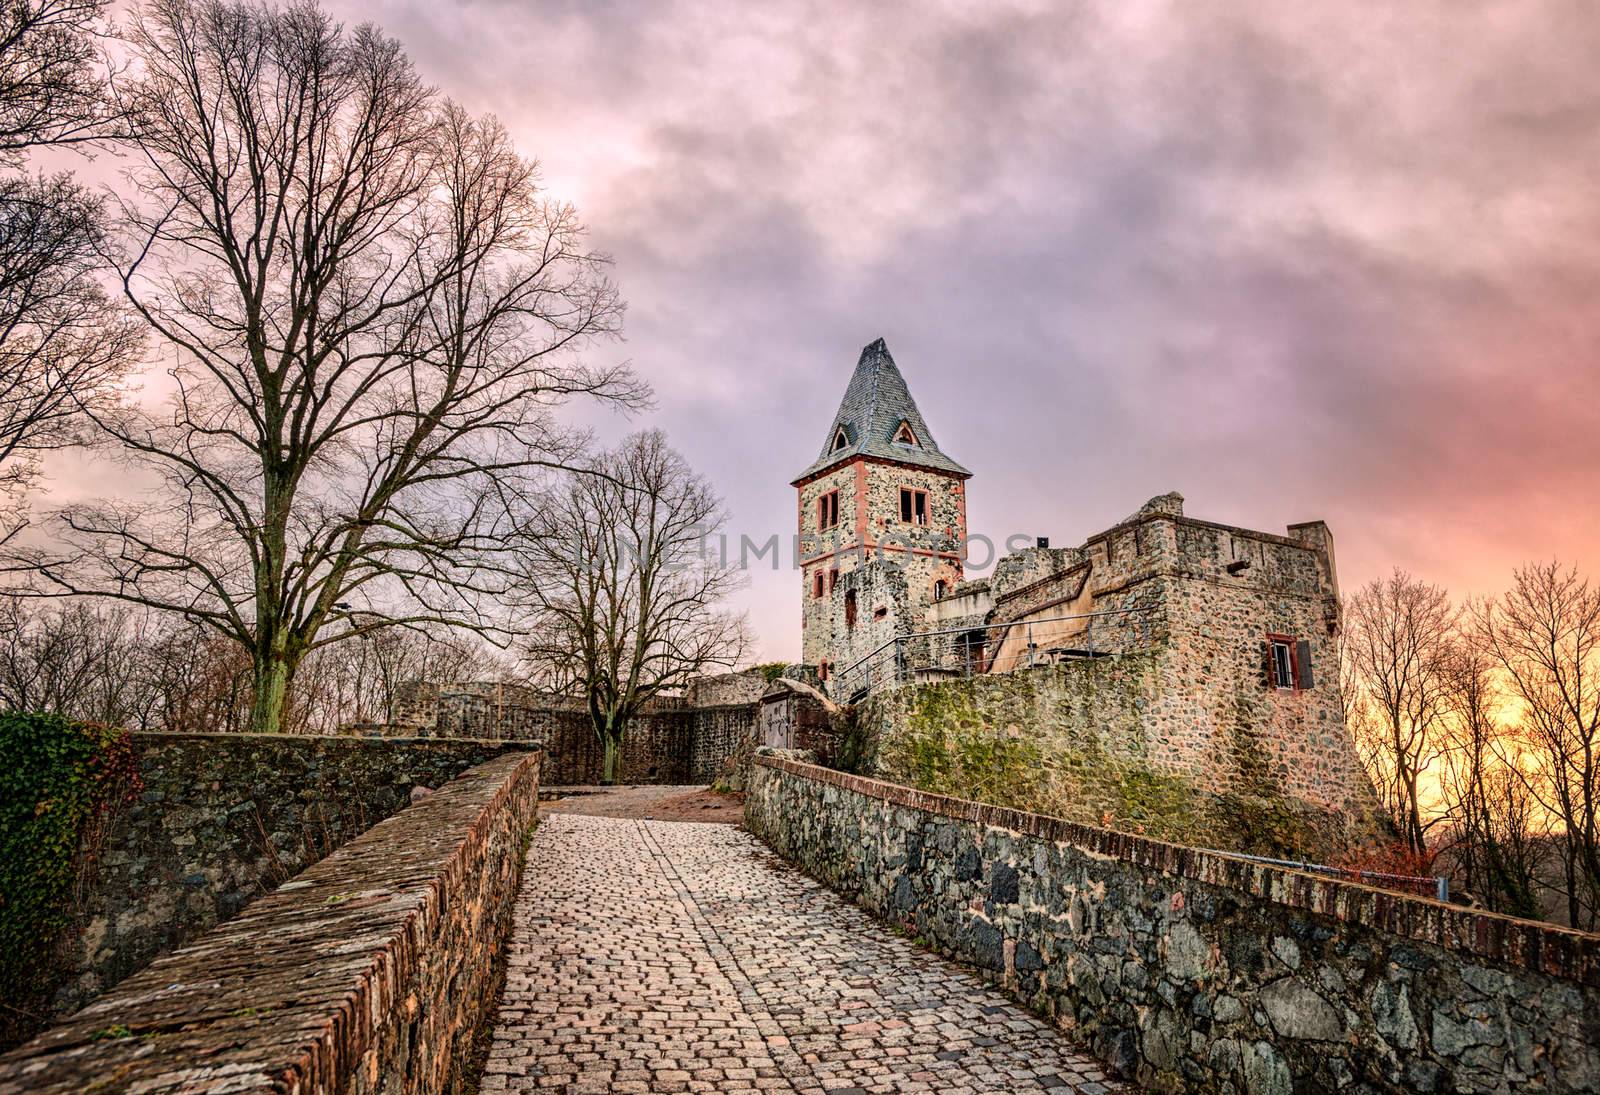 Castle Frankenstein in Odenwald, Darmstadt, Germany by GlobePhotos